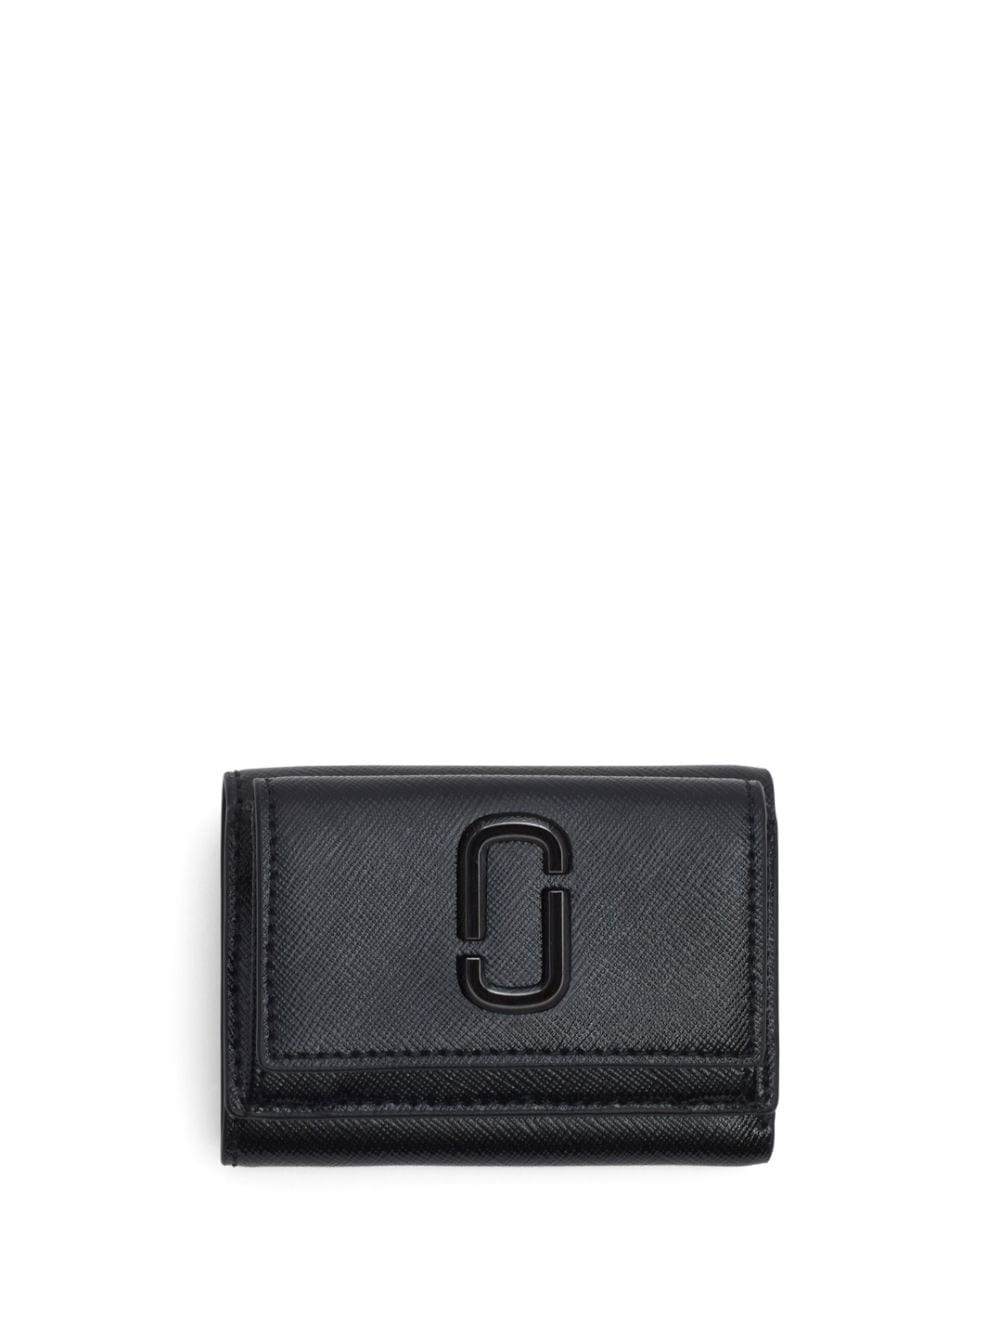 Marc Jacobs The Mini Trifold wallet - Black von Marc Jacobs